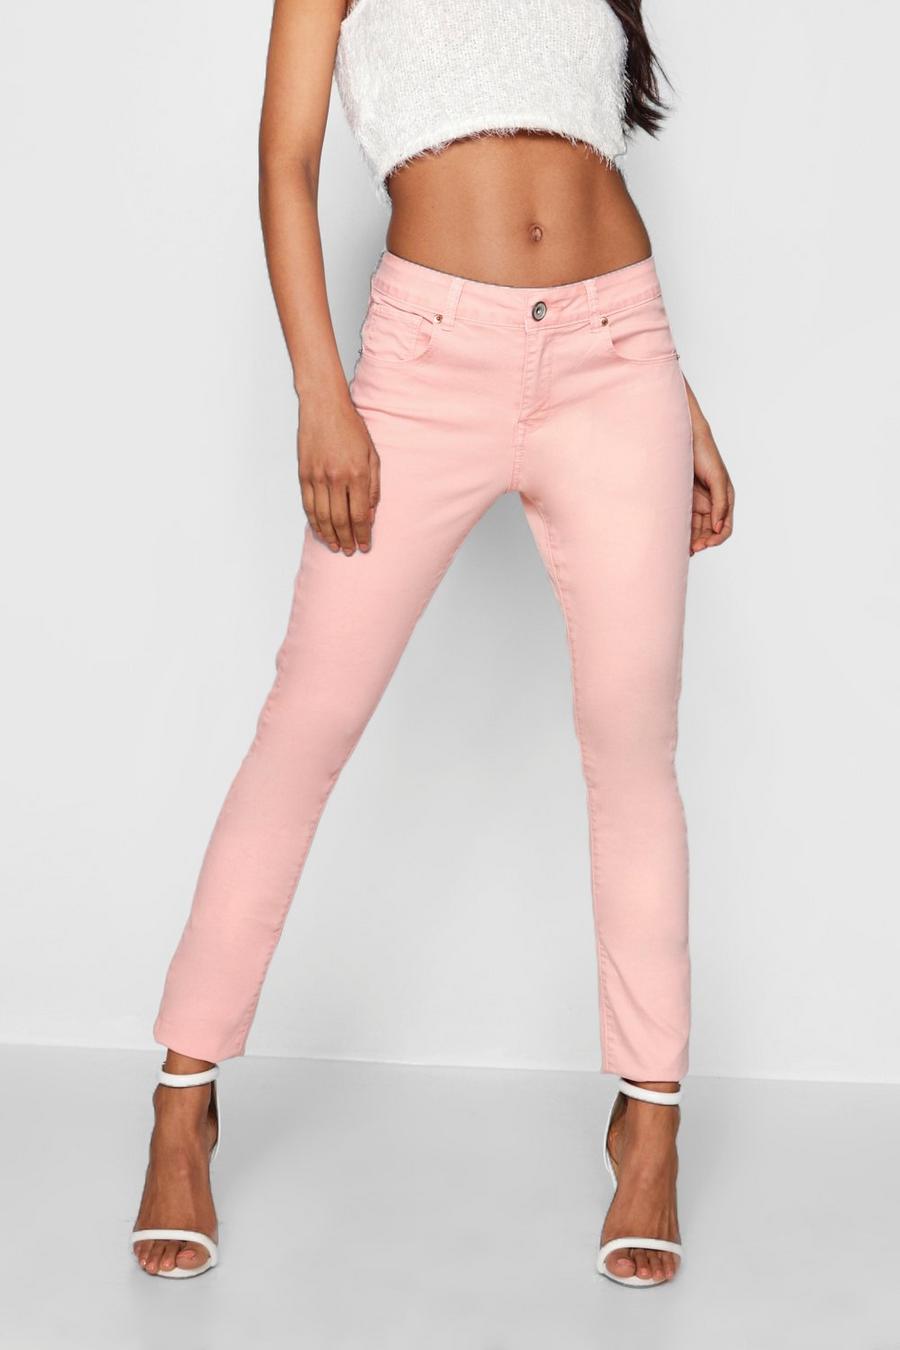 Women's Light Pink Skinny Jeans